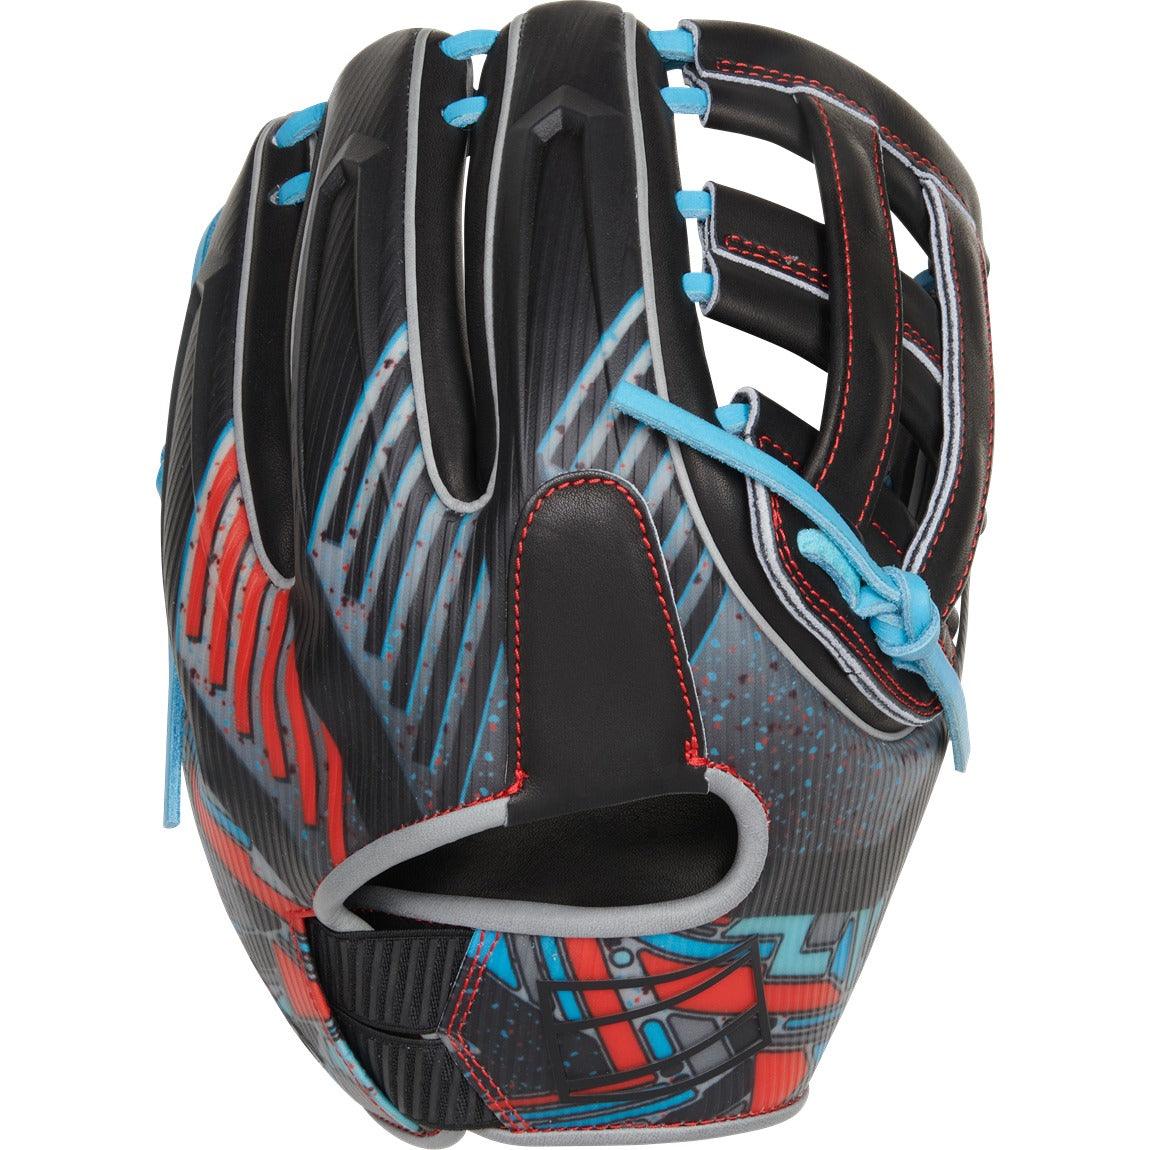 REV1X 11.75" Baseball Glove - Senior - Sports Excellence